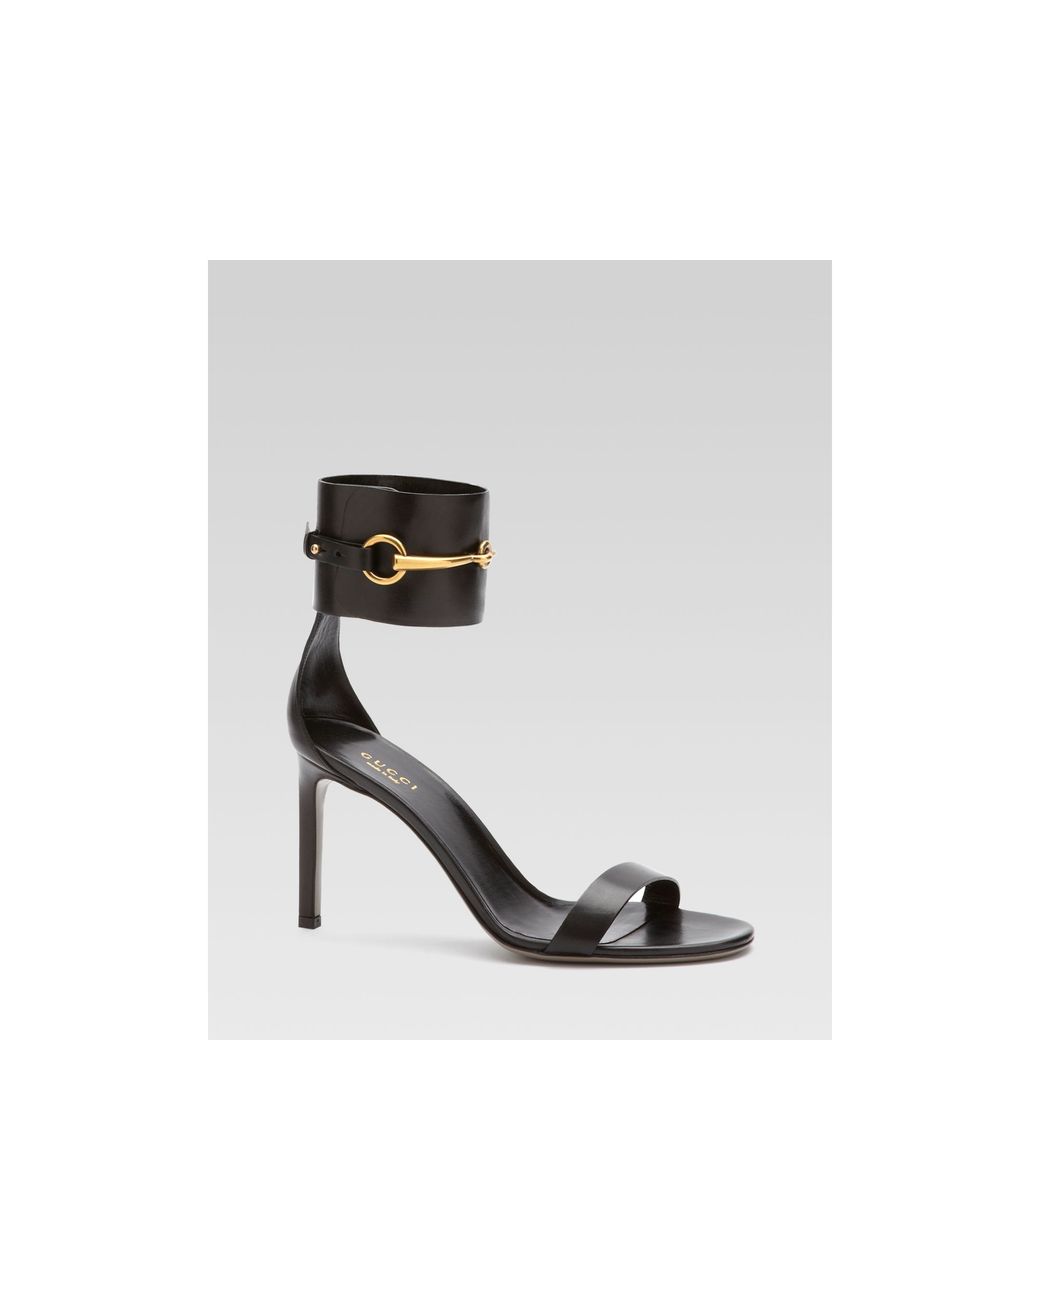 Gucci Ursula Ankle Strap High Heel Sandal in Black | Lyst